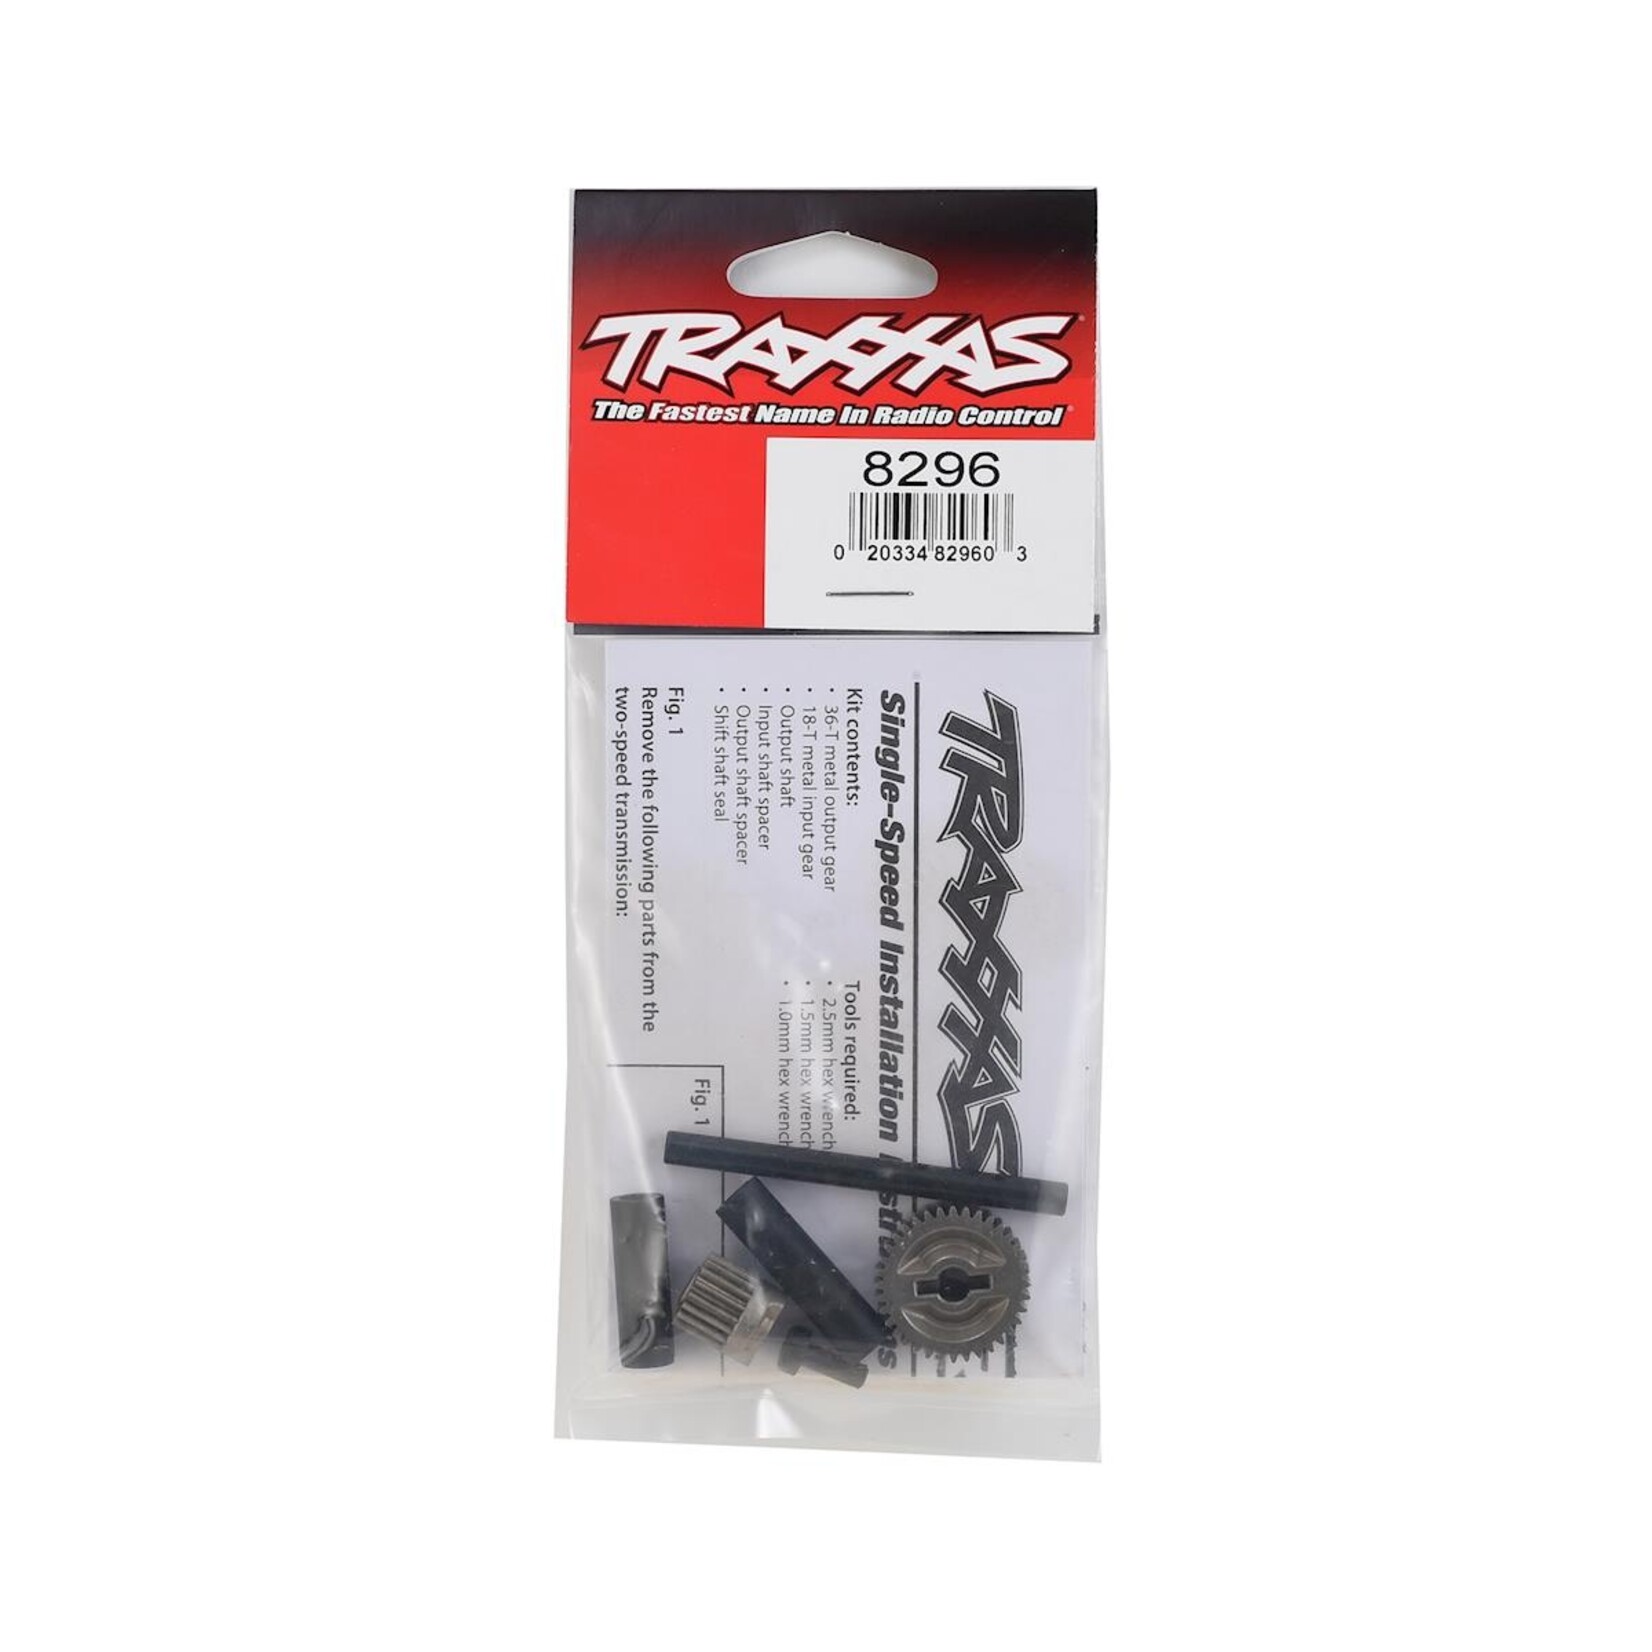 Traxxas Traxxas TRX-4 Metal Single Speed Transmission Gears #8296